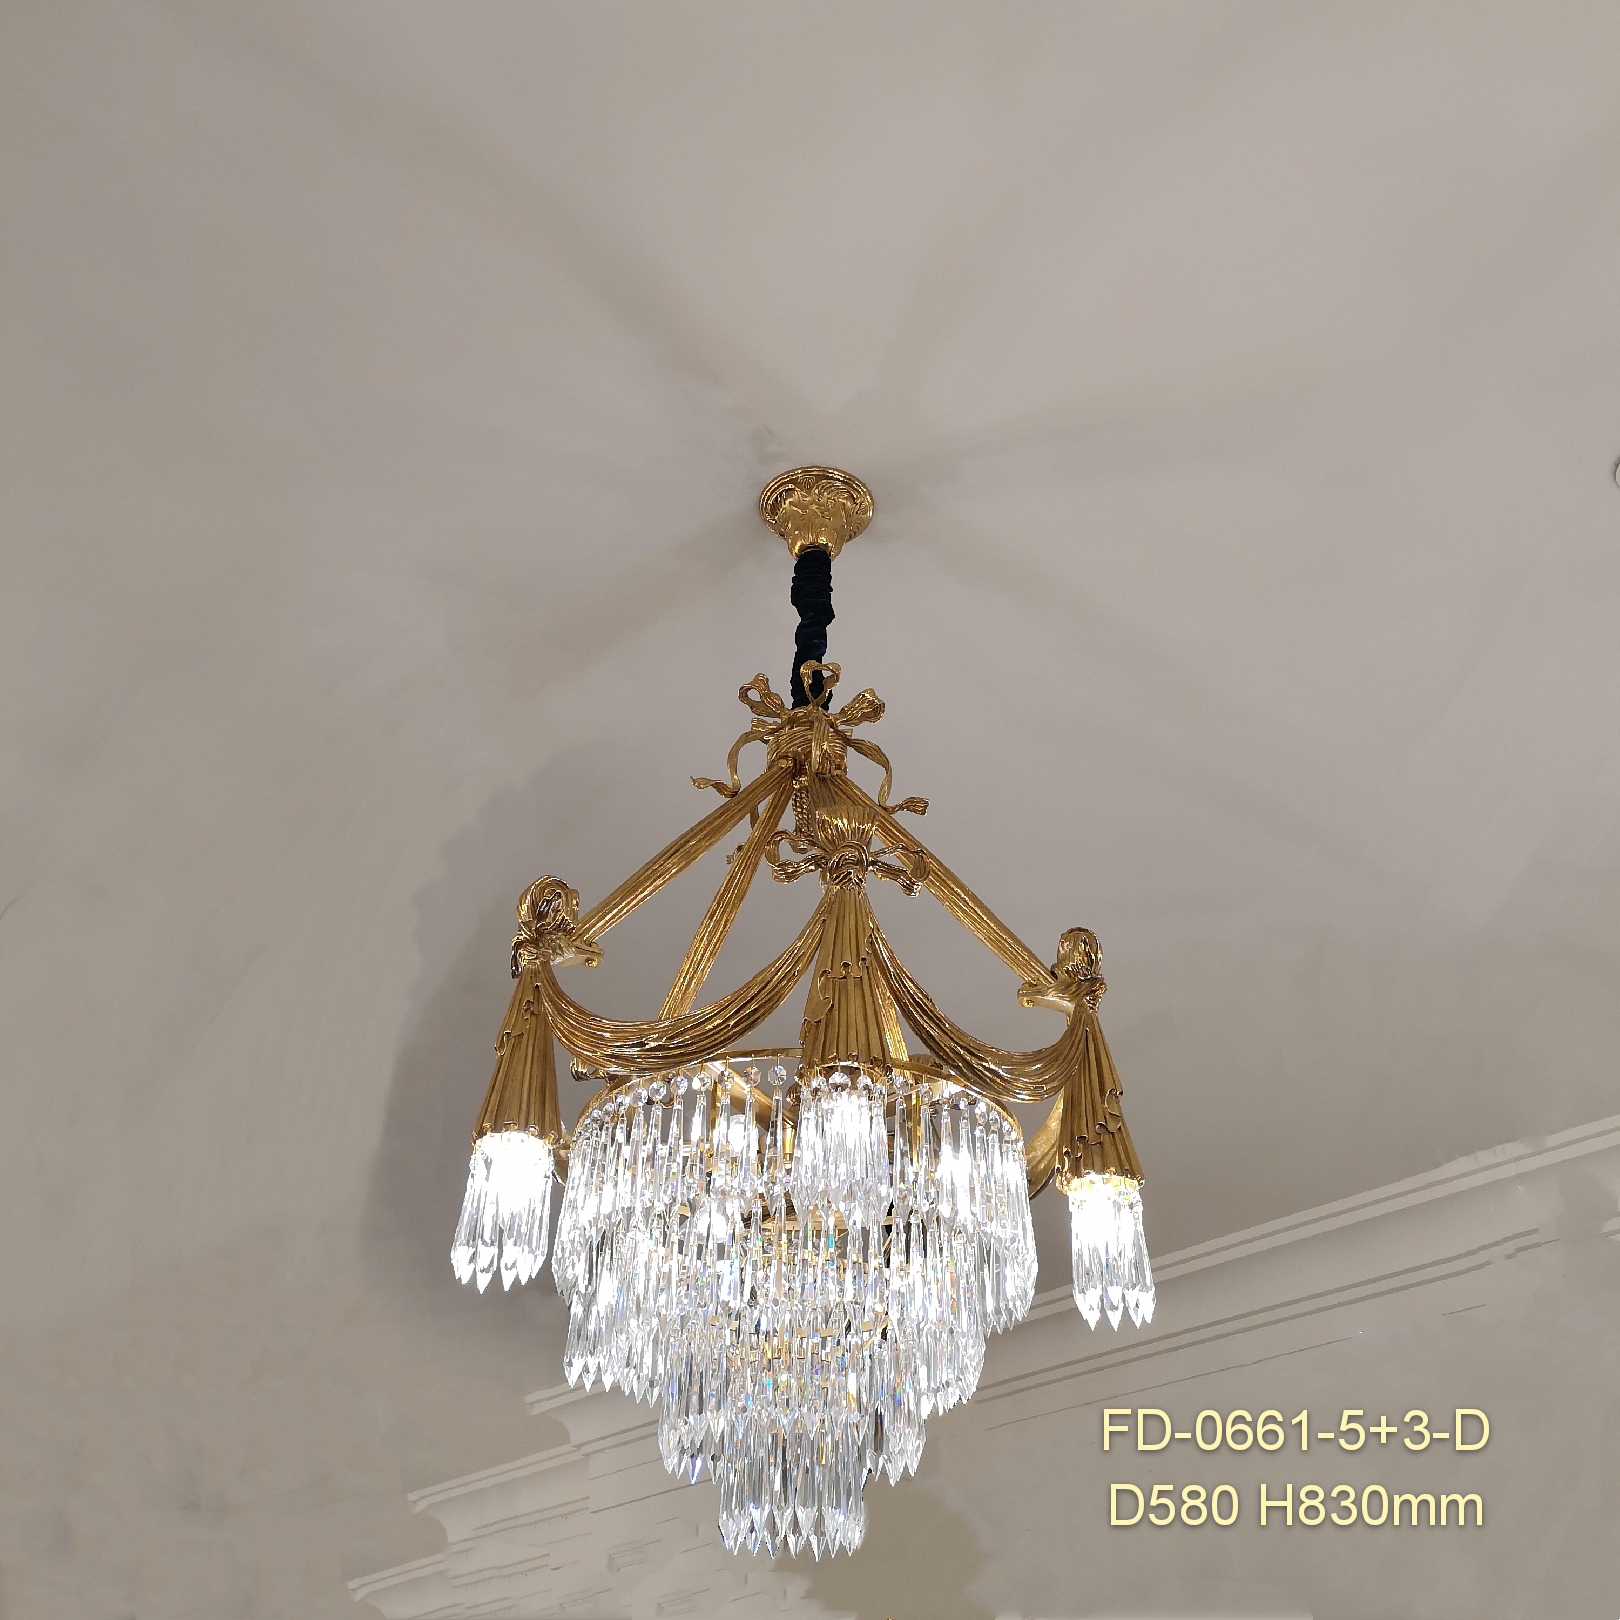 Crystal Decorative Antique Brass Chandeliers for Hotel Villa (FD-1713-8+8+4)